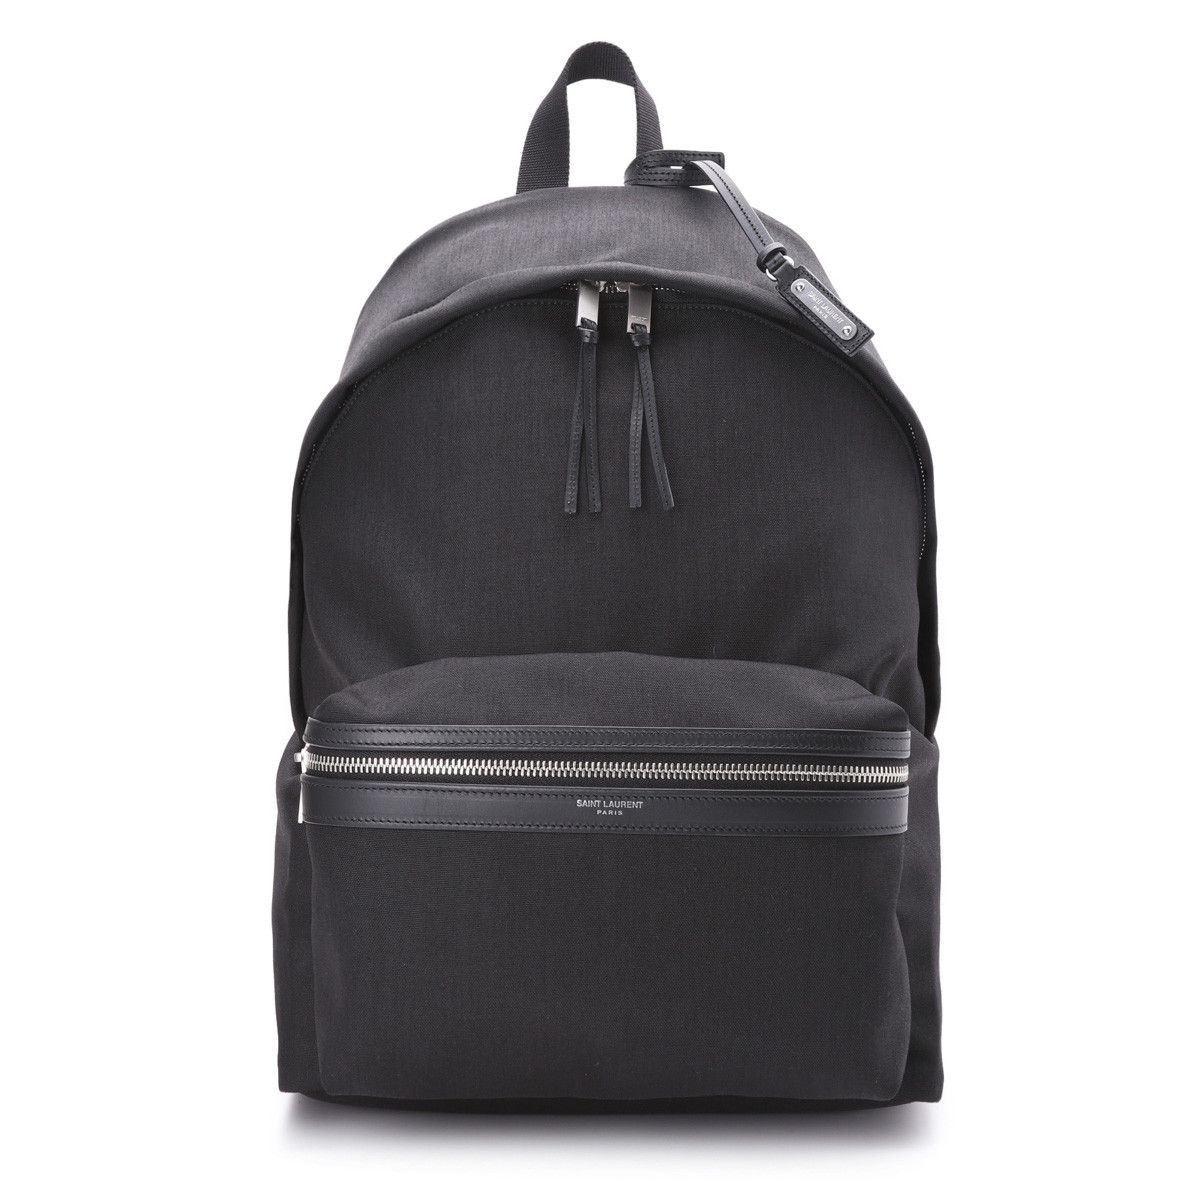 Yves Saint Laurent Yves Saint Laurent Backpack Rucksack Black Size ONE SIZE - 1 Preview